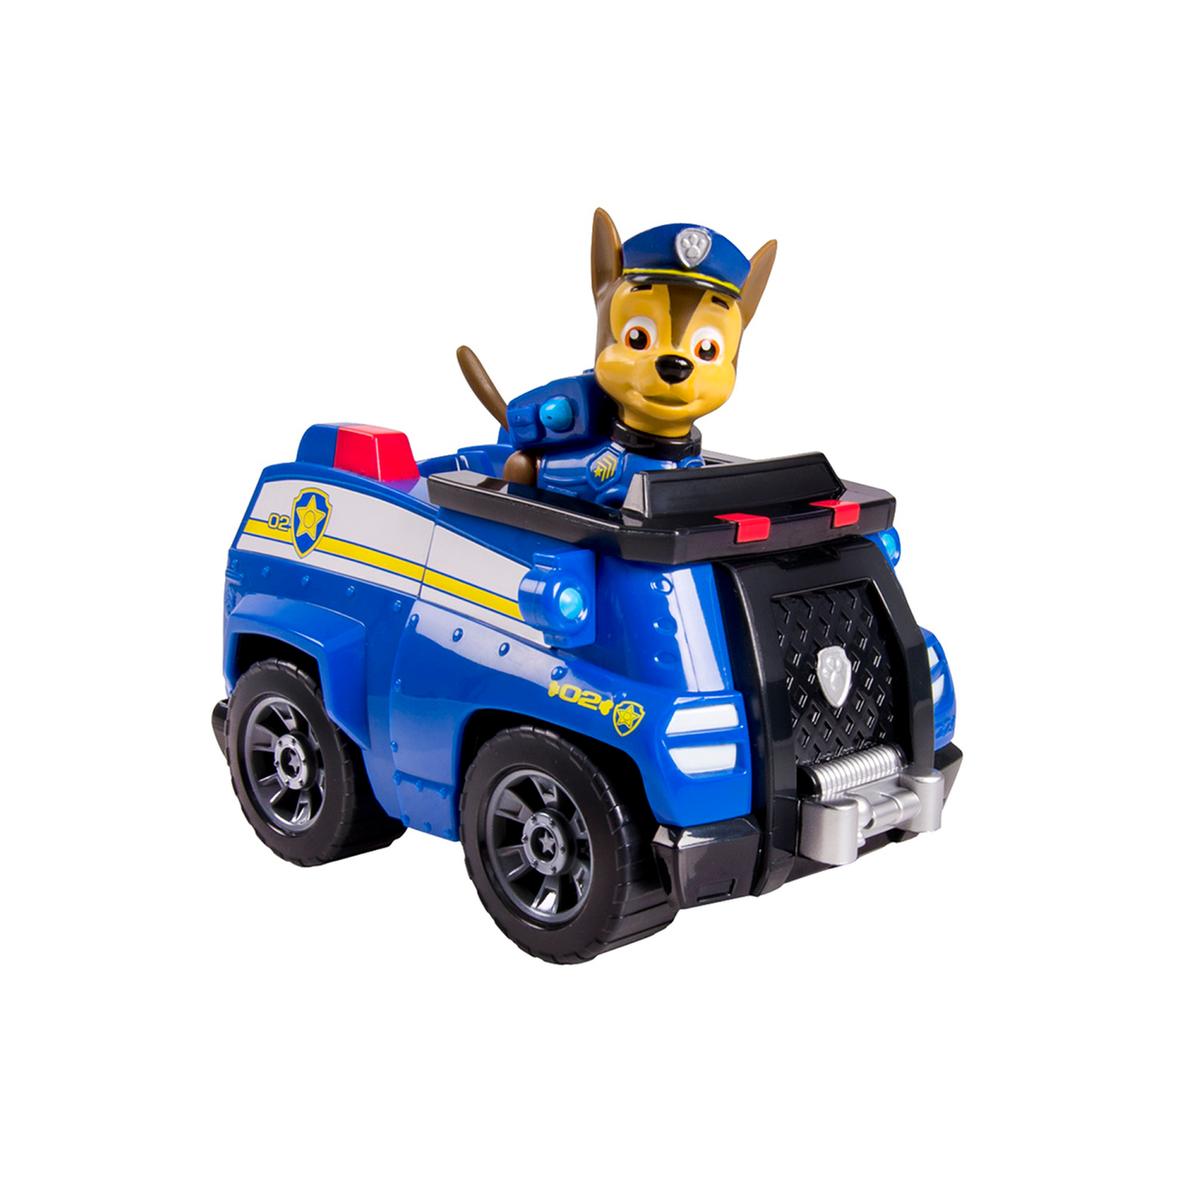 Patrulla Canina - Vehículo con Personaje (varios modelos), Patrulla Canina.  Cat 54